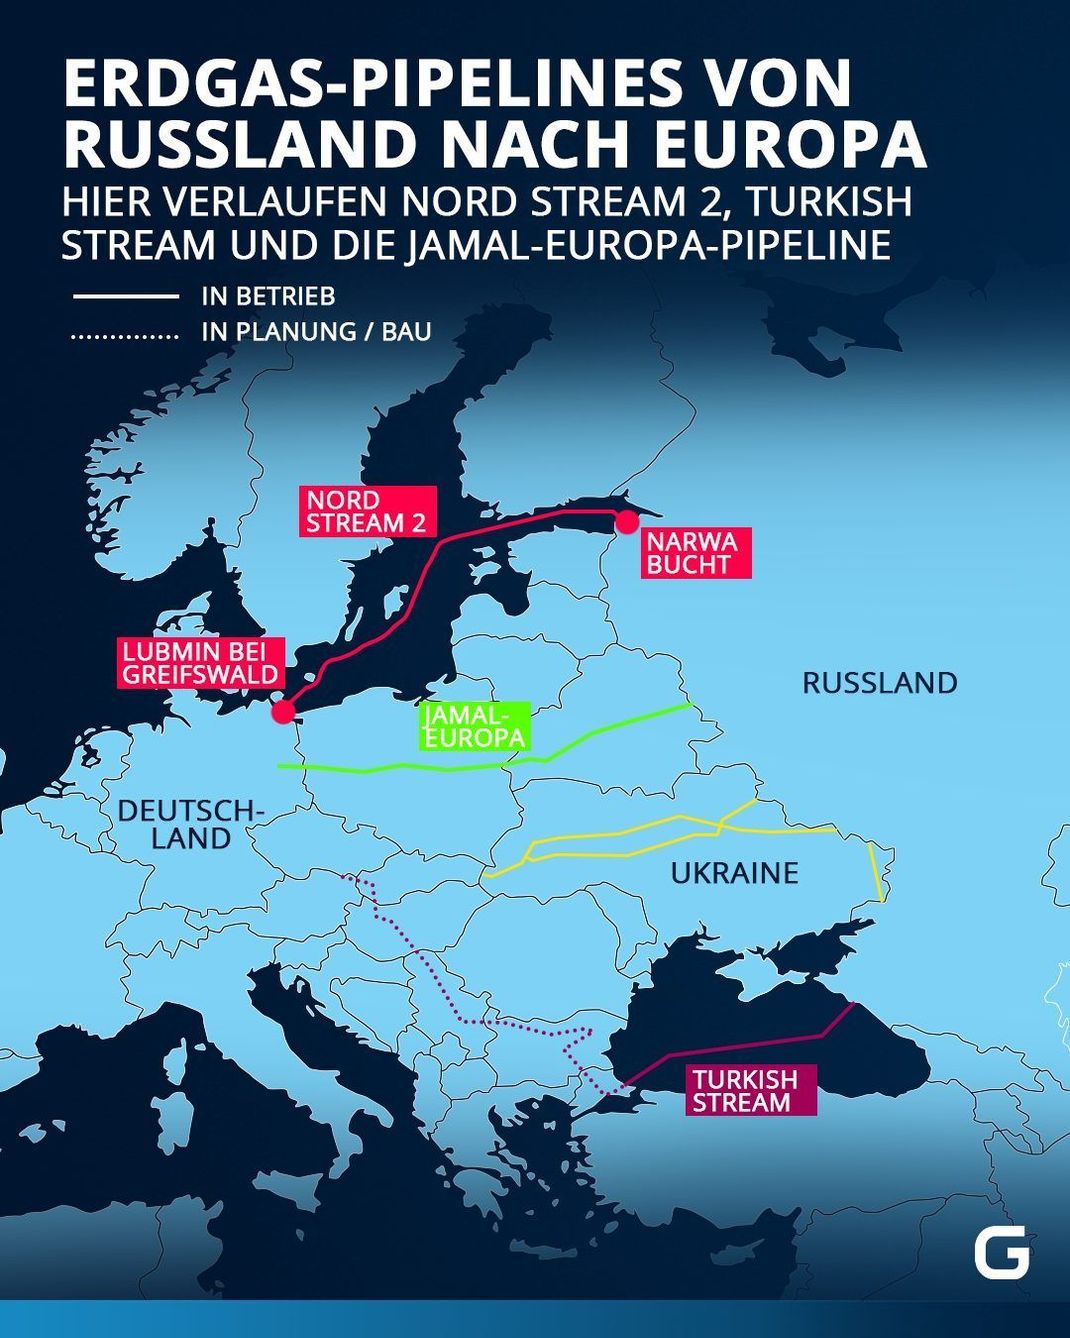 Erdgas-Pipelines: Nord Stream 2, Turkish Stream, Jamal-Europa-Pipeline